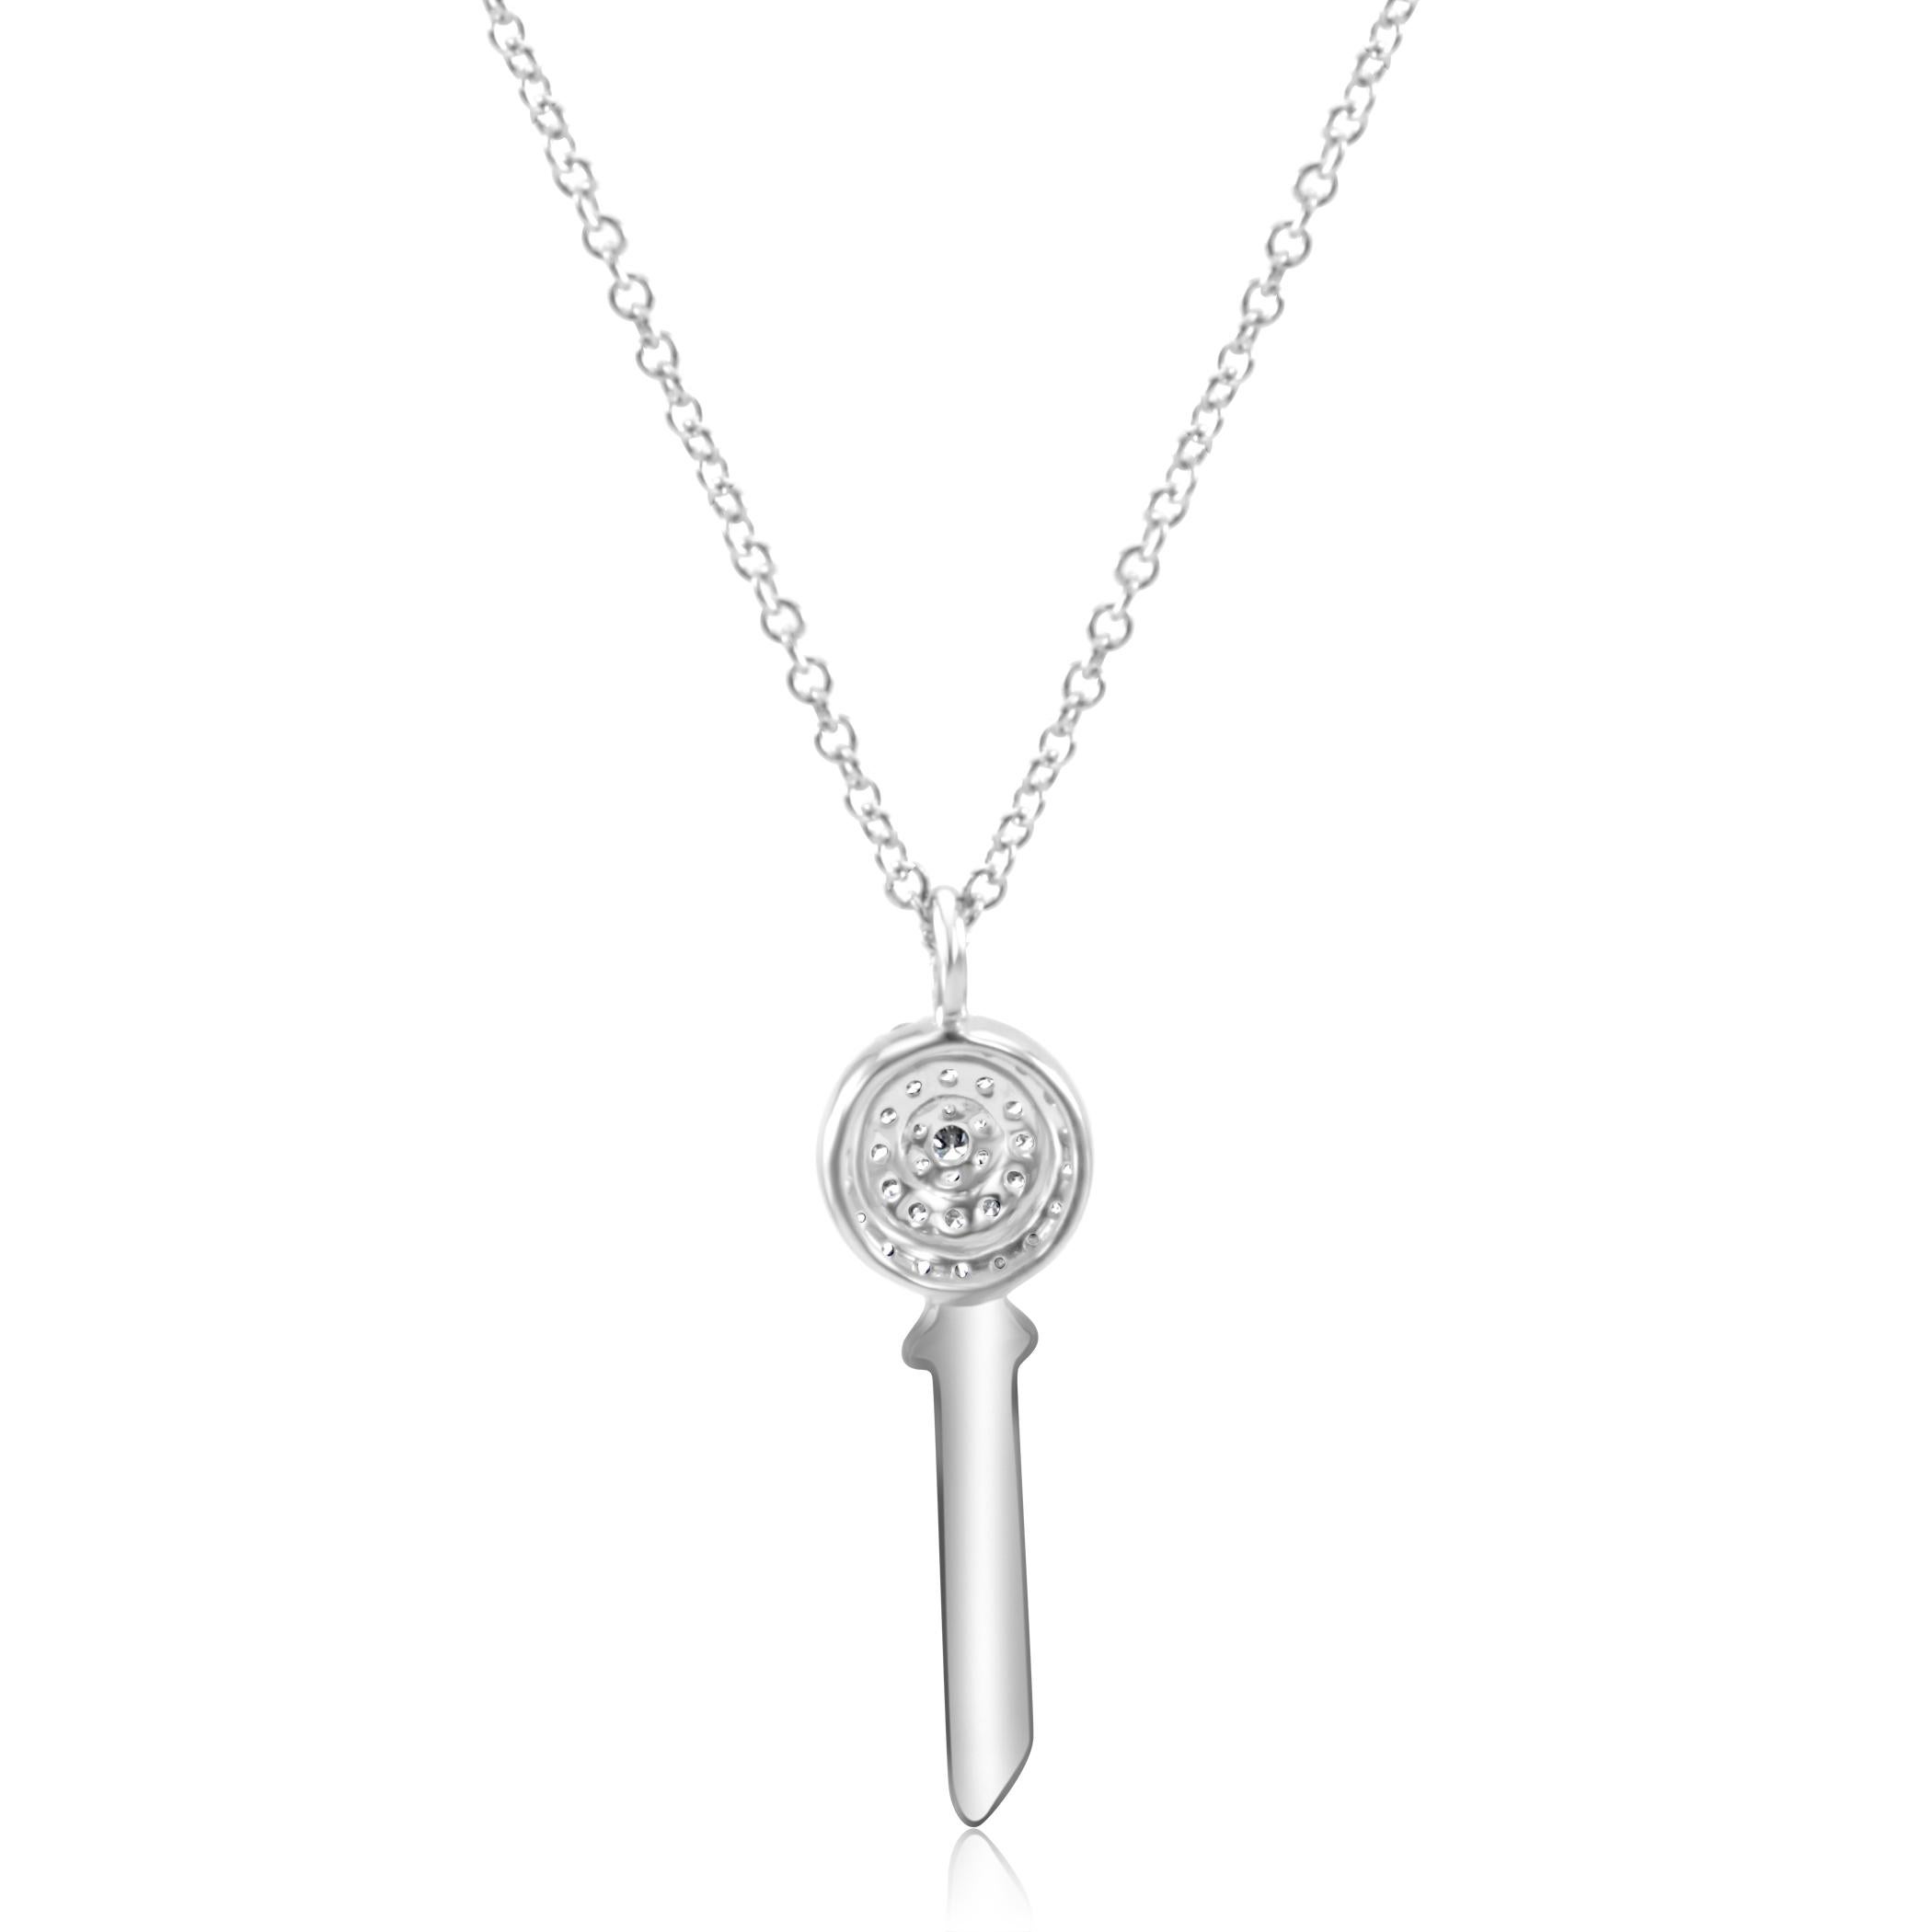 Round Cut White Diamond Round Drop Fashion Key Pendant 14 Karat White Gold Chain Necklace